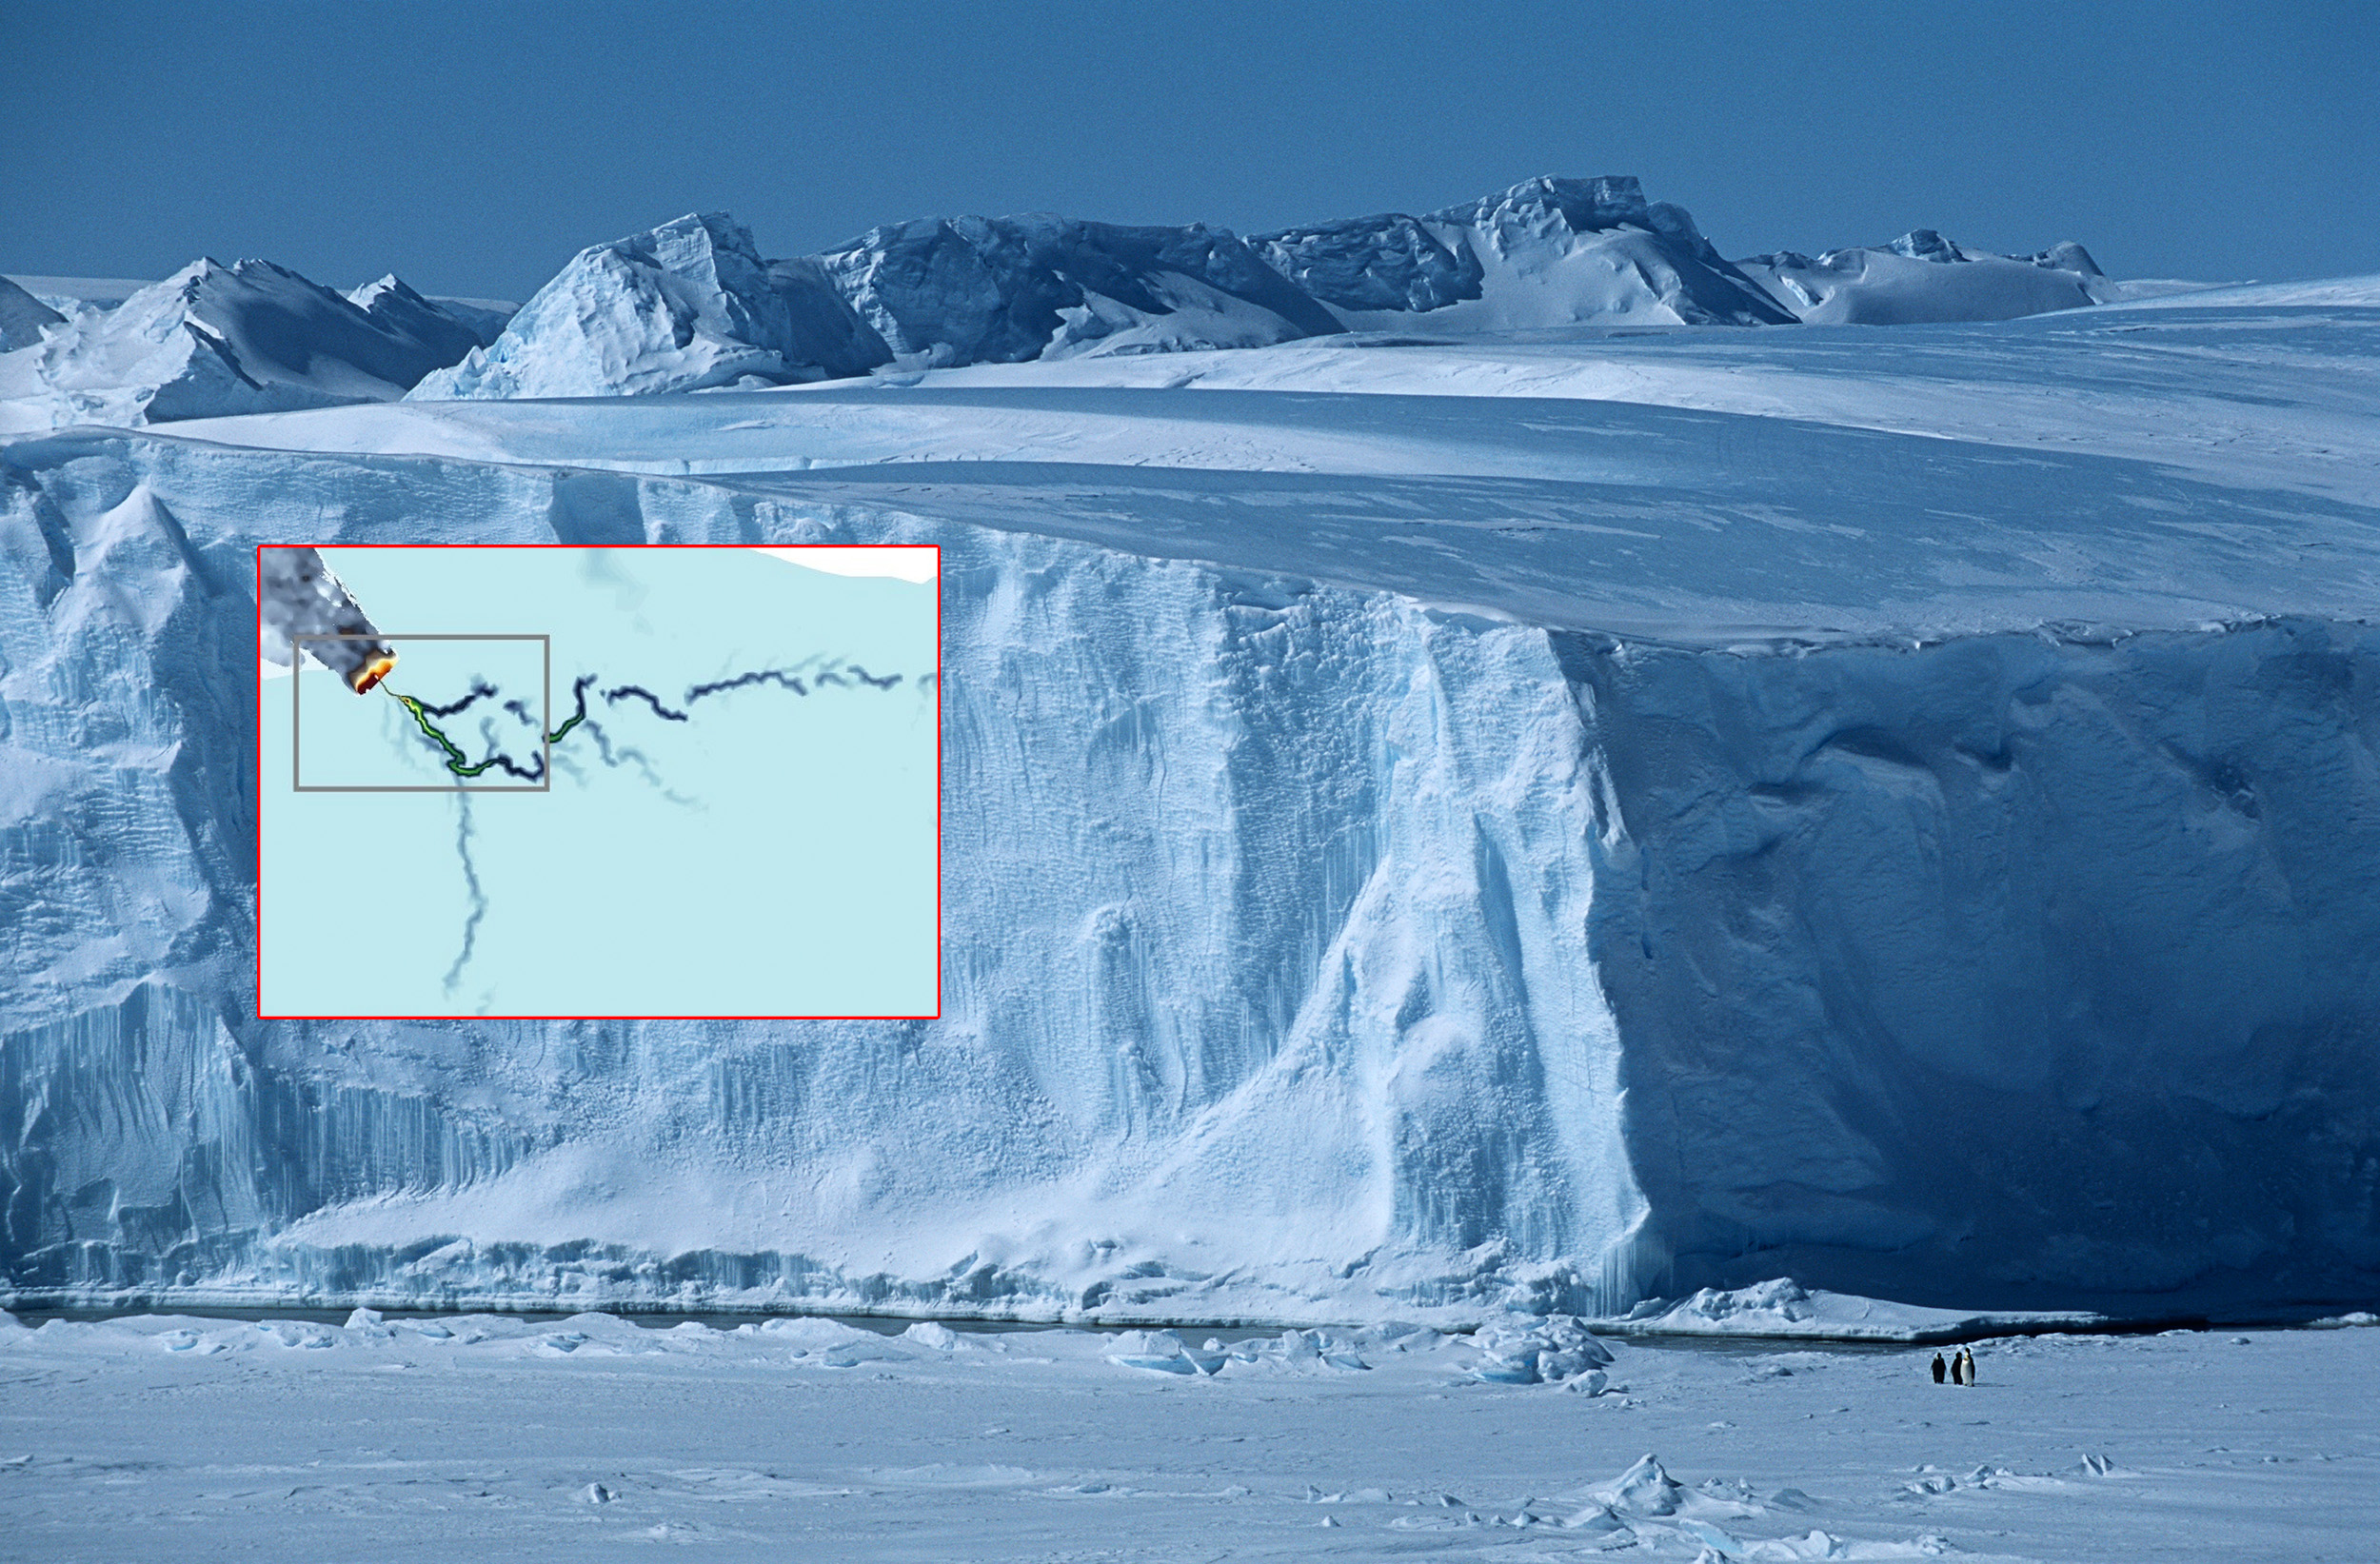 Antarctica Weddell Sea Riiser Larsen Ice Shelf Iceberg and radar image of river beneath Antarctica. YAYIMAGES.